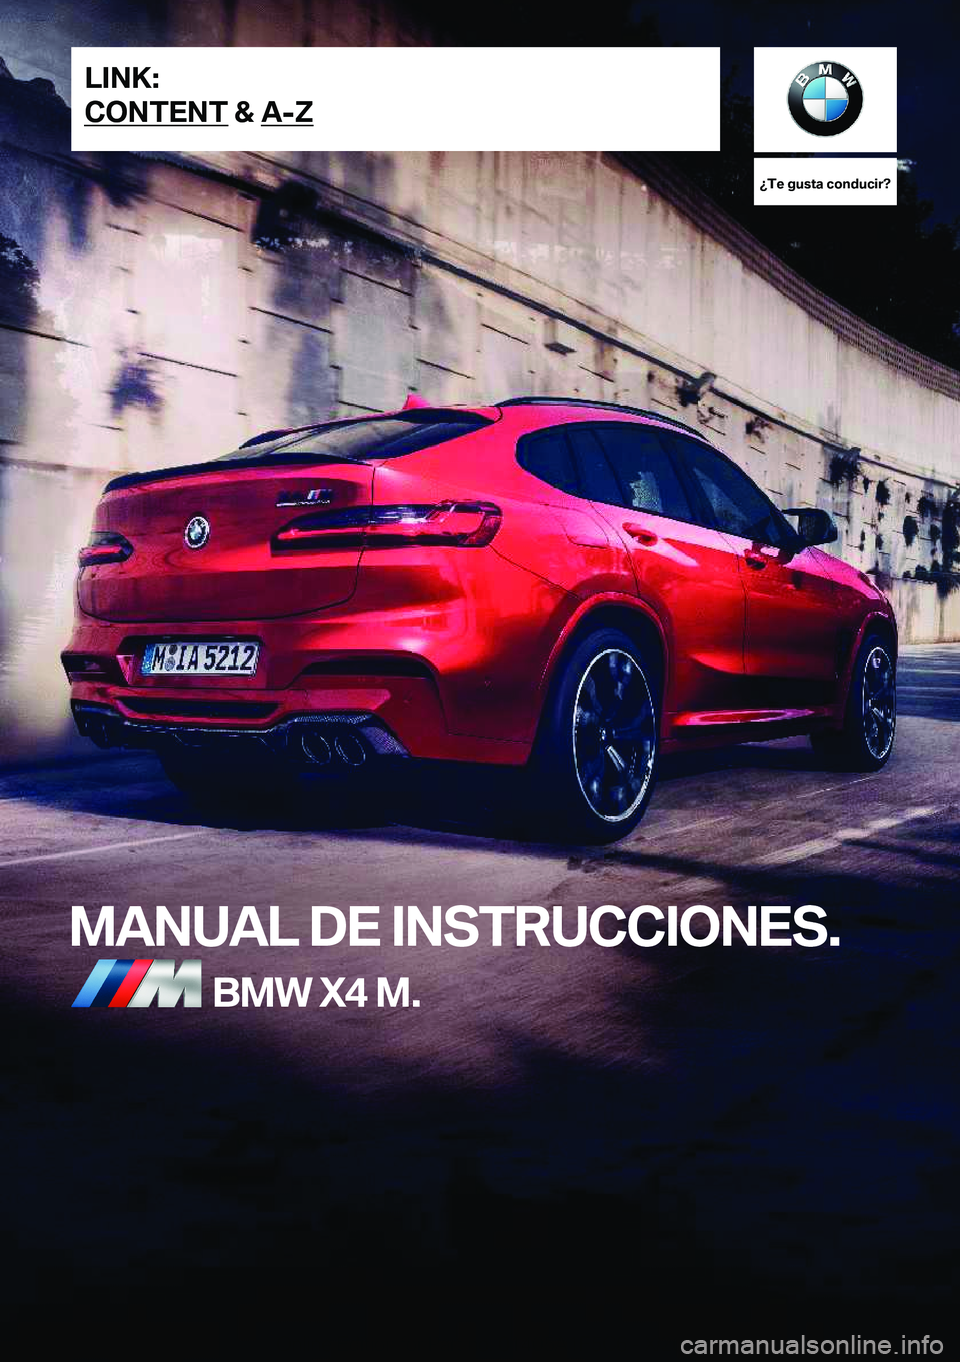 BMW X4 M 2021  Manuales de Empleo (in Spanish) ��T�e��g�u�s�t�a��c�o�n�d�u�c�i�r� 
�M�A�N�U�A�L��D�E��I�N�S�T�R�U�C�C�I�O�N�E�S�.�B�M�W��X�4��M�.�L�I�N�K�:
�C�O�N�T�E�N�T��&��A�-�Z�O�n�l�i�n�e��E�d�i�t�i�o�n��f�o�r��P�a�r�t��n�o�.��0